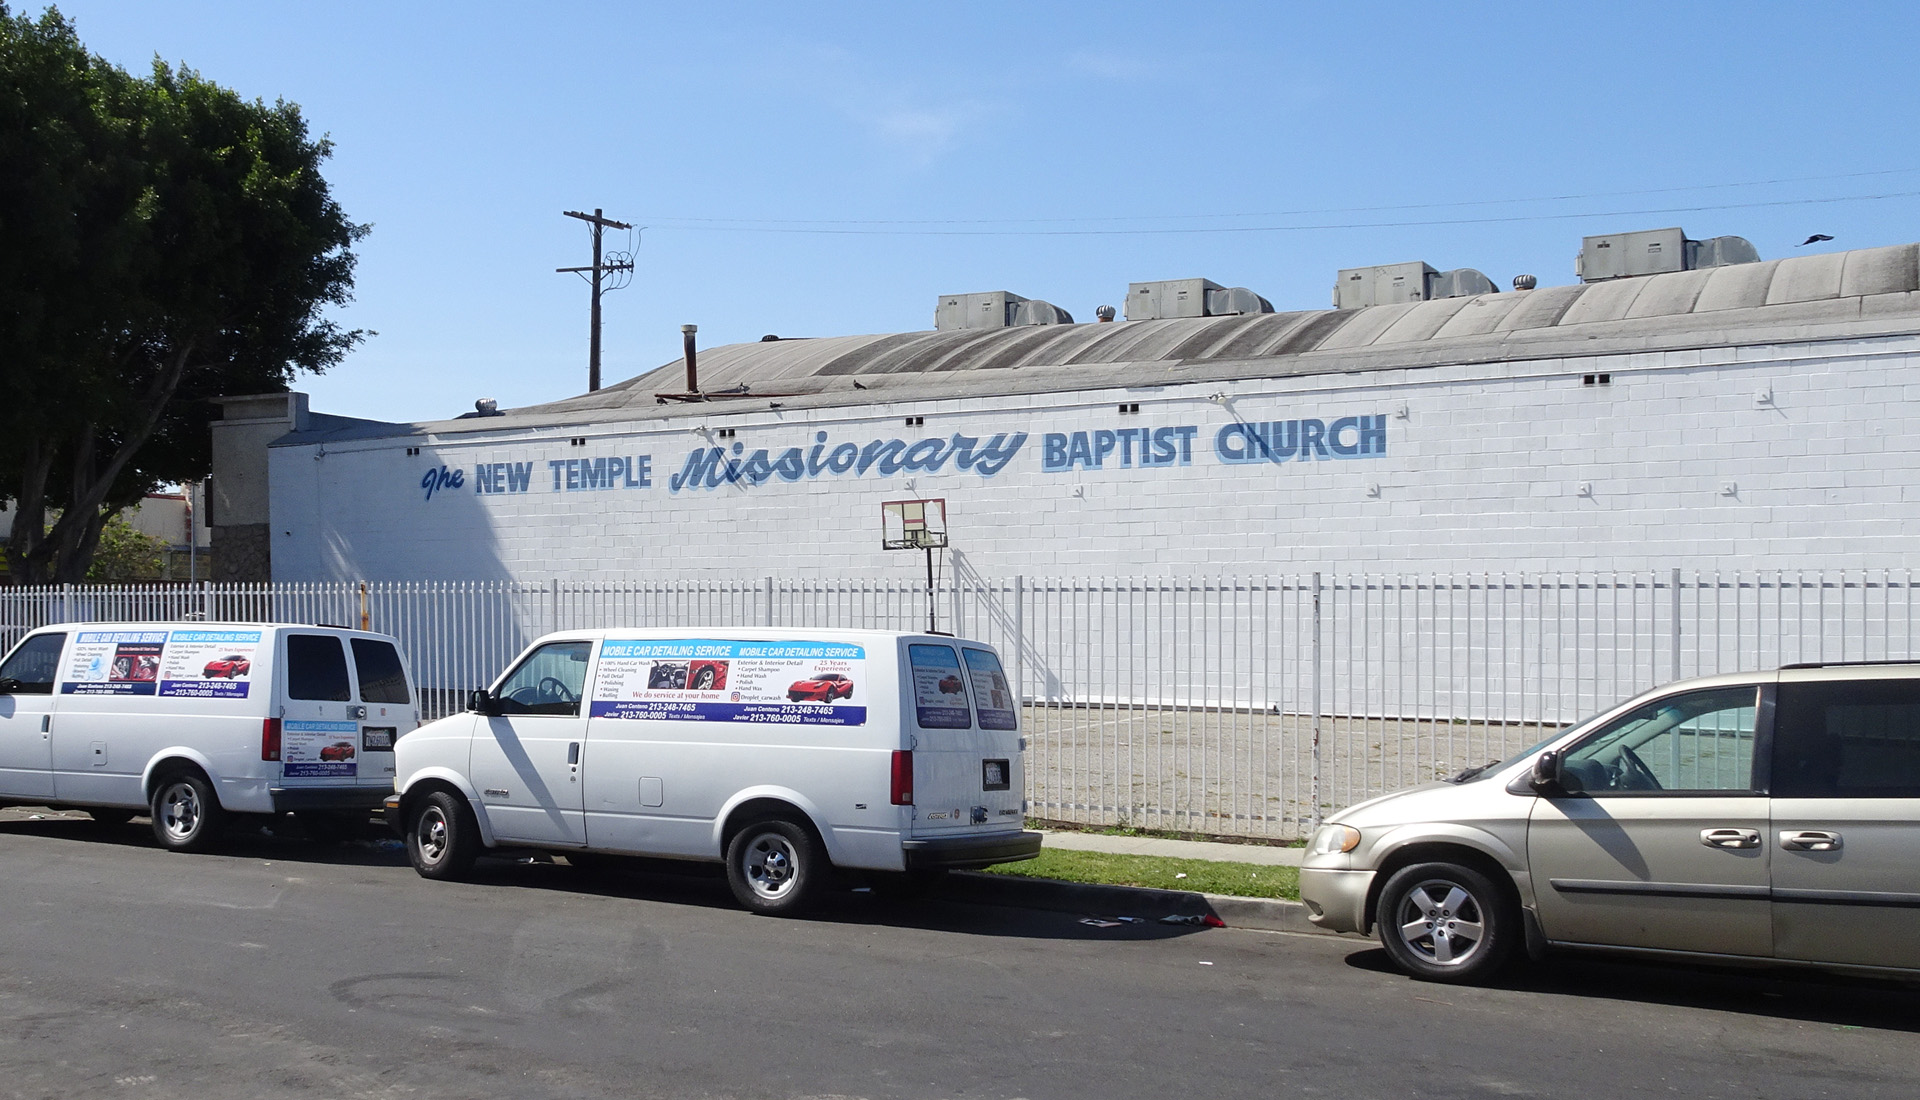 New Temple Missionary Baptist Church